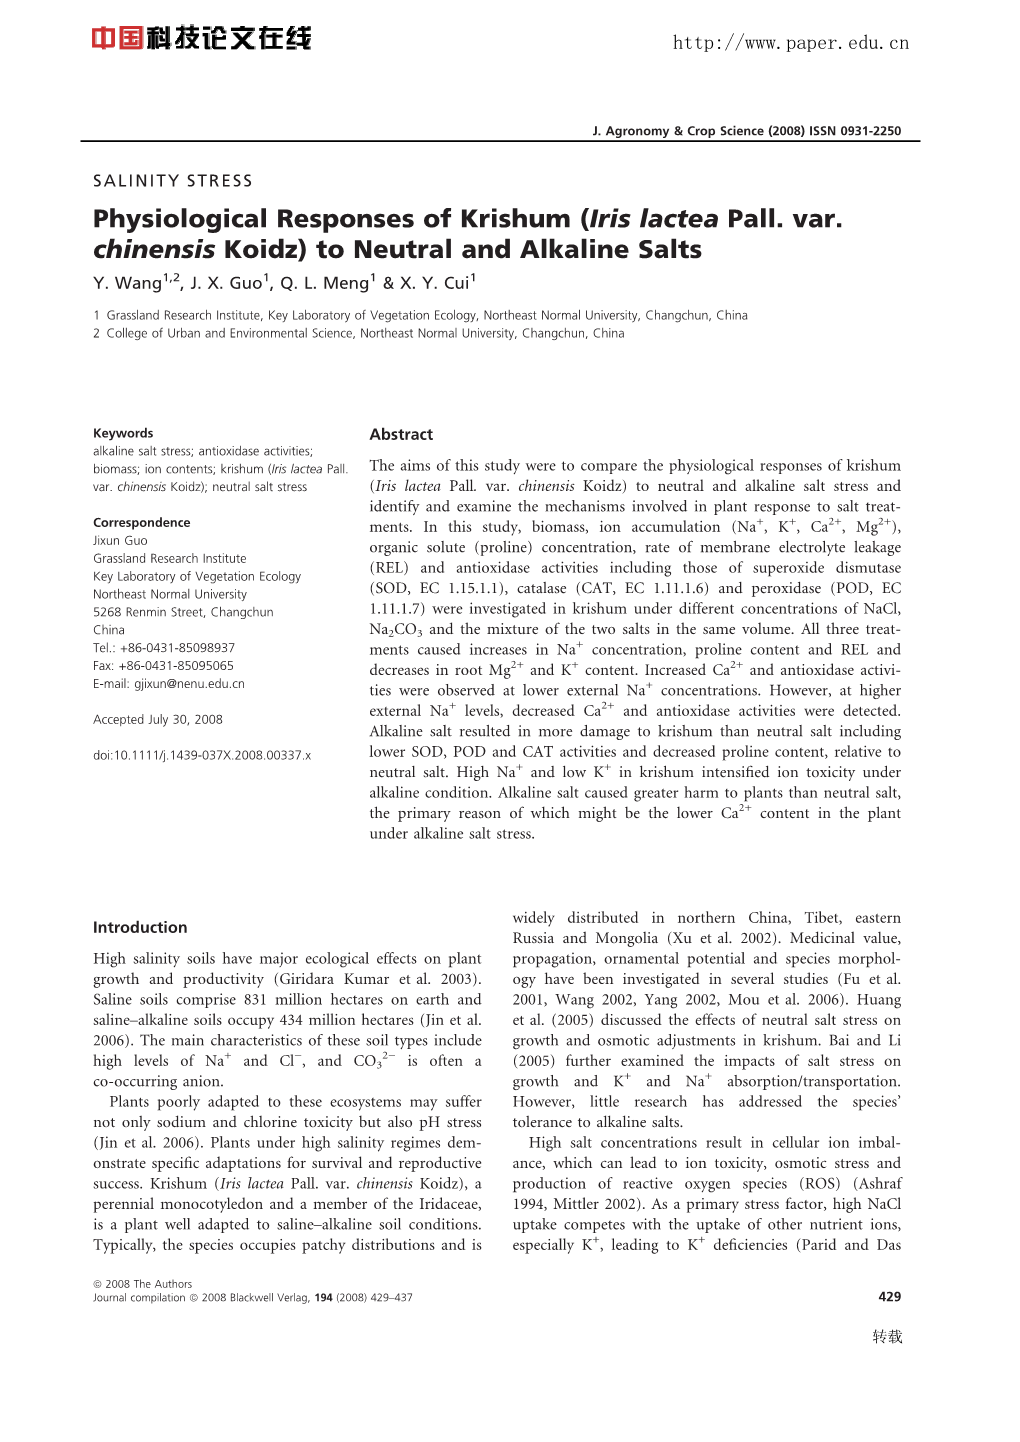 Physiological Responses of Krishum (Iris Lactea Pall. Var. Chinensis Koidz) to Neutral and Alkaline Salts Y